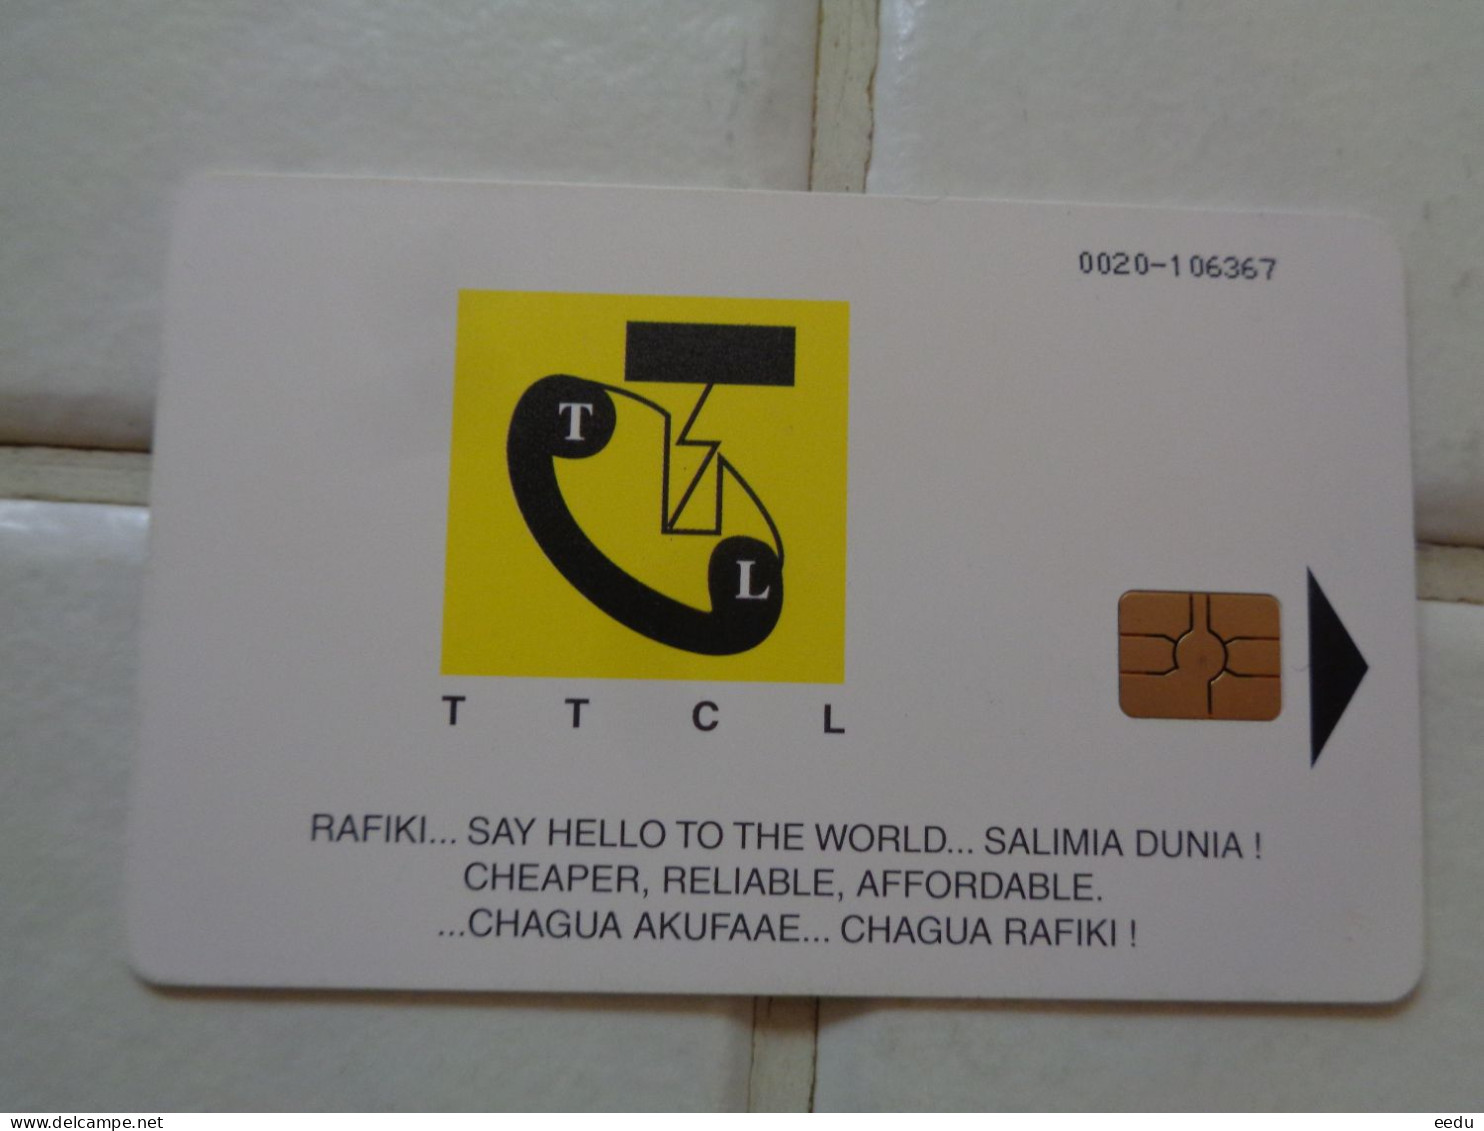 Tanzania Phonecard - Tanzanie